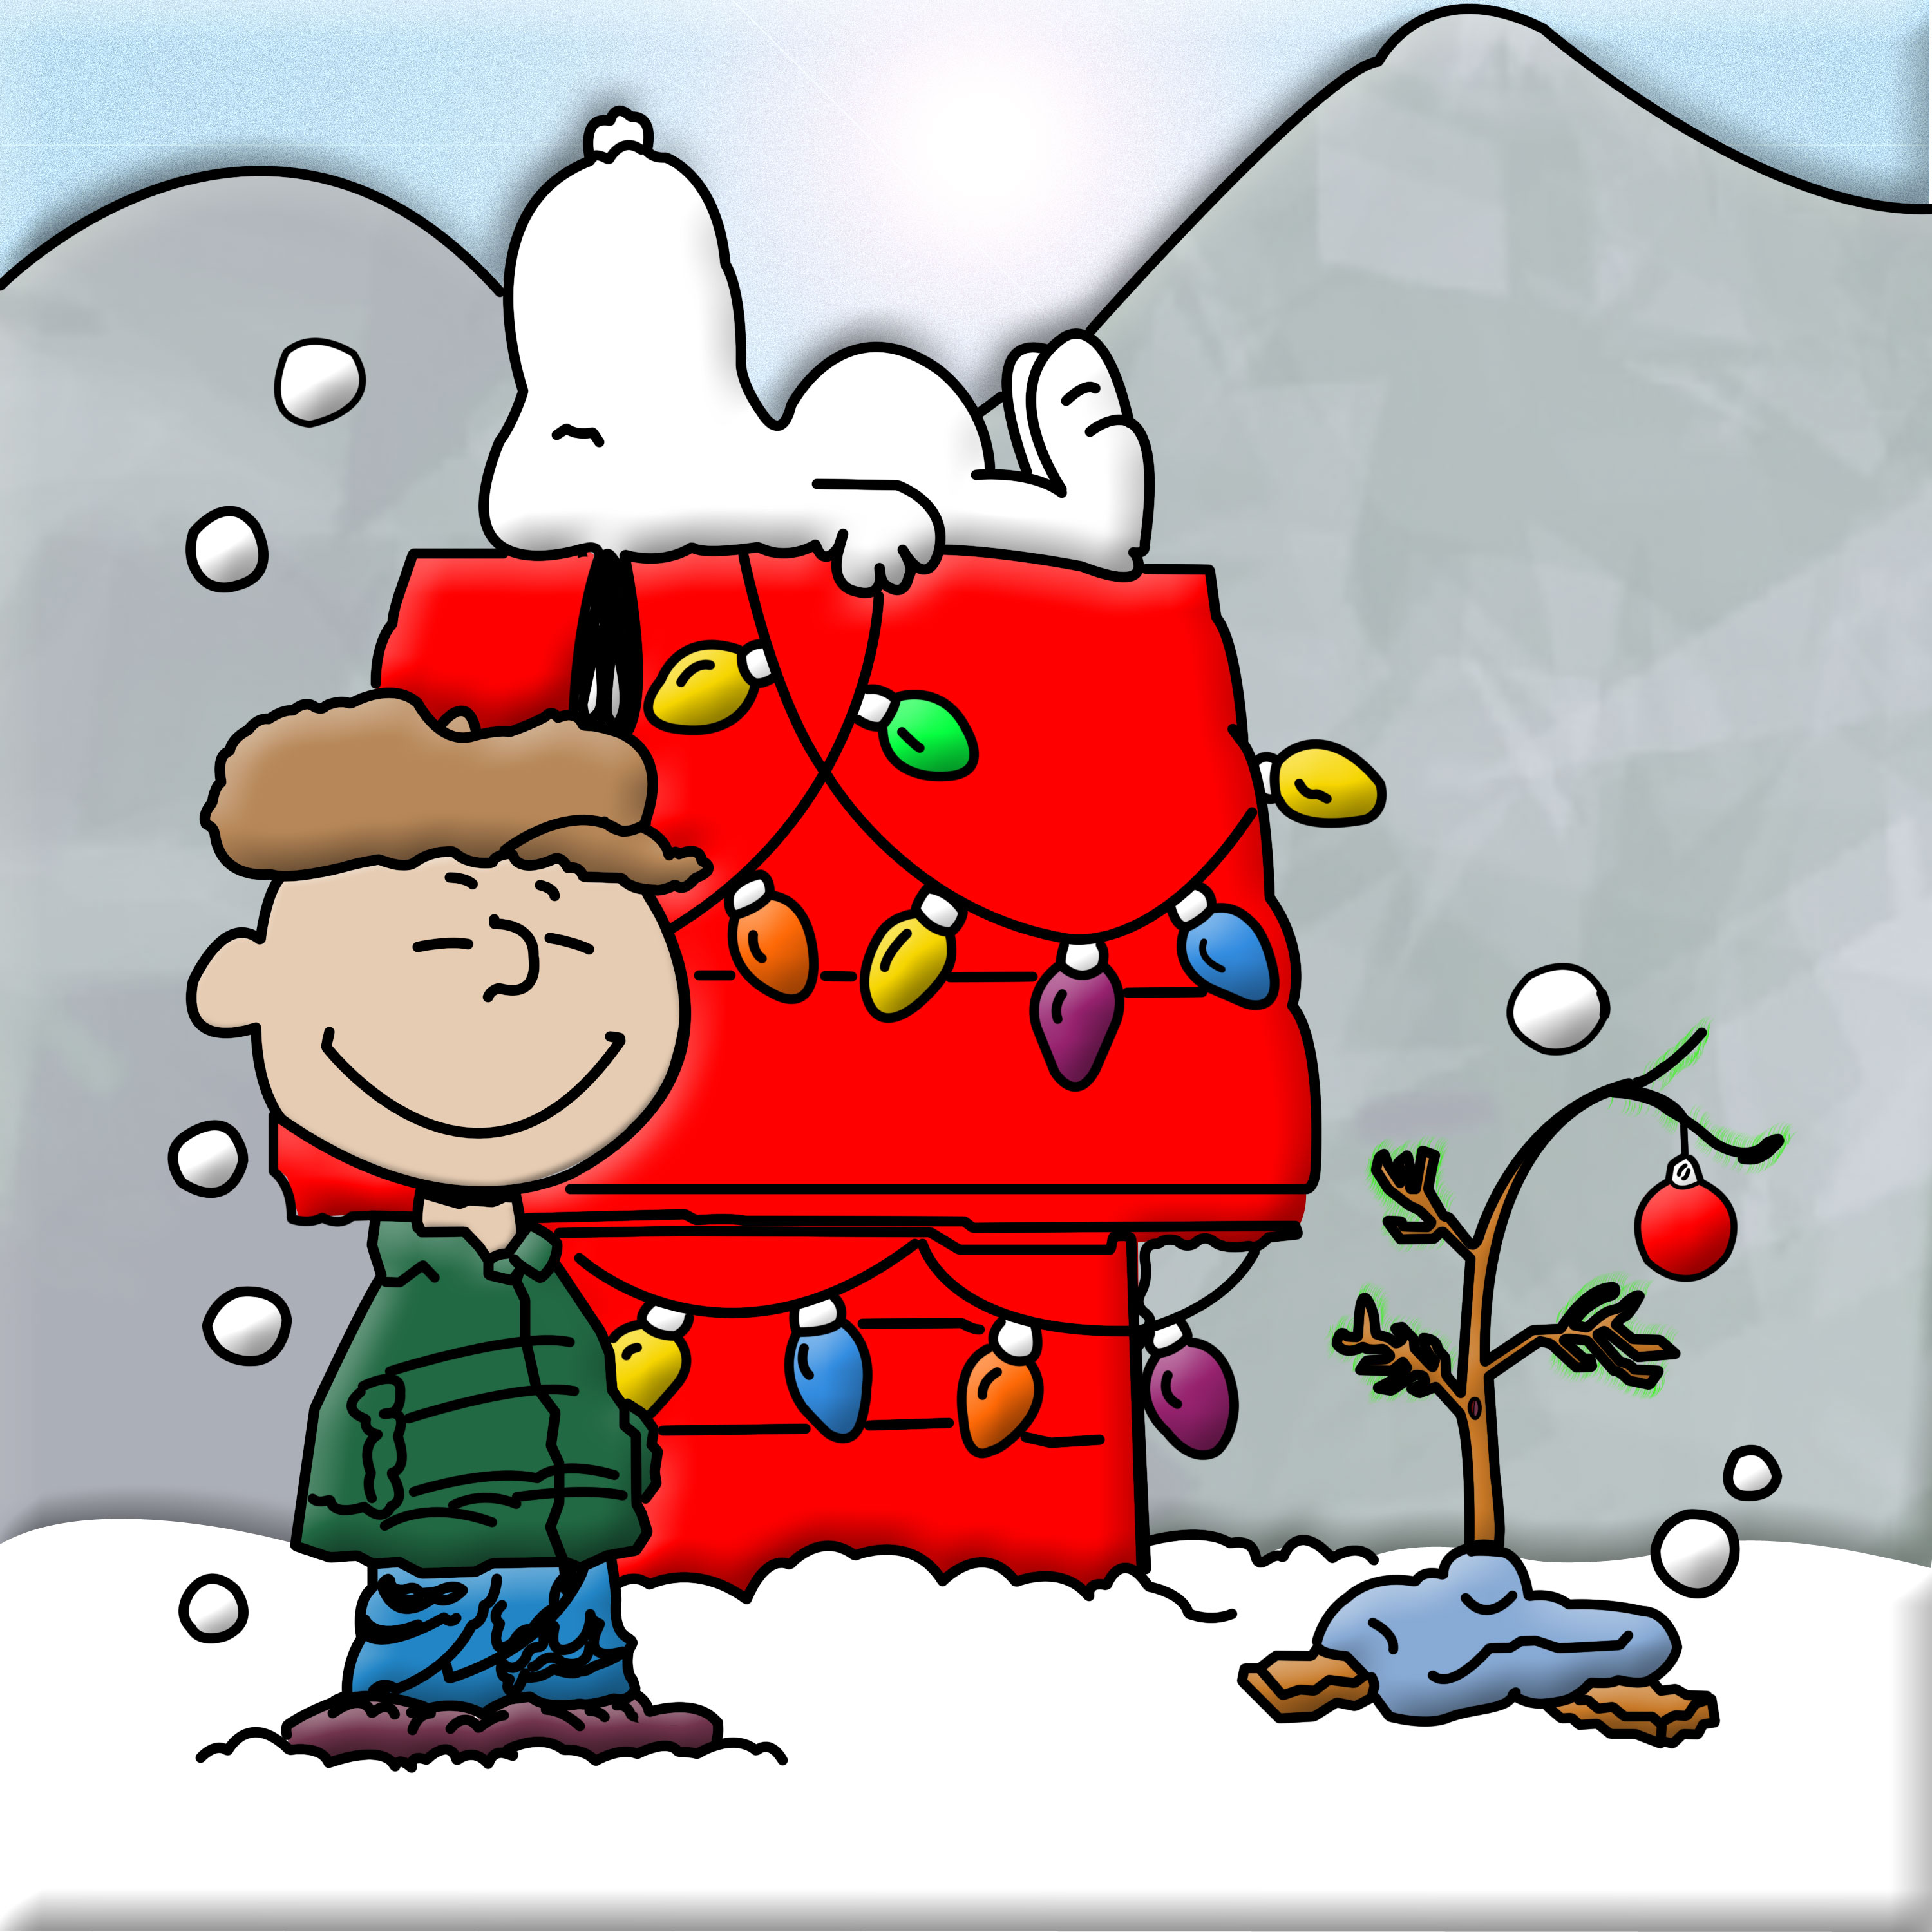 Charlie Brown Christmas Tree Image Full Desktop Background